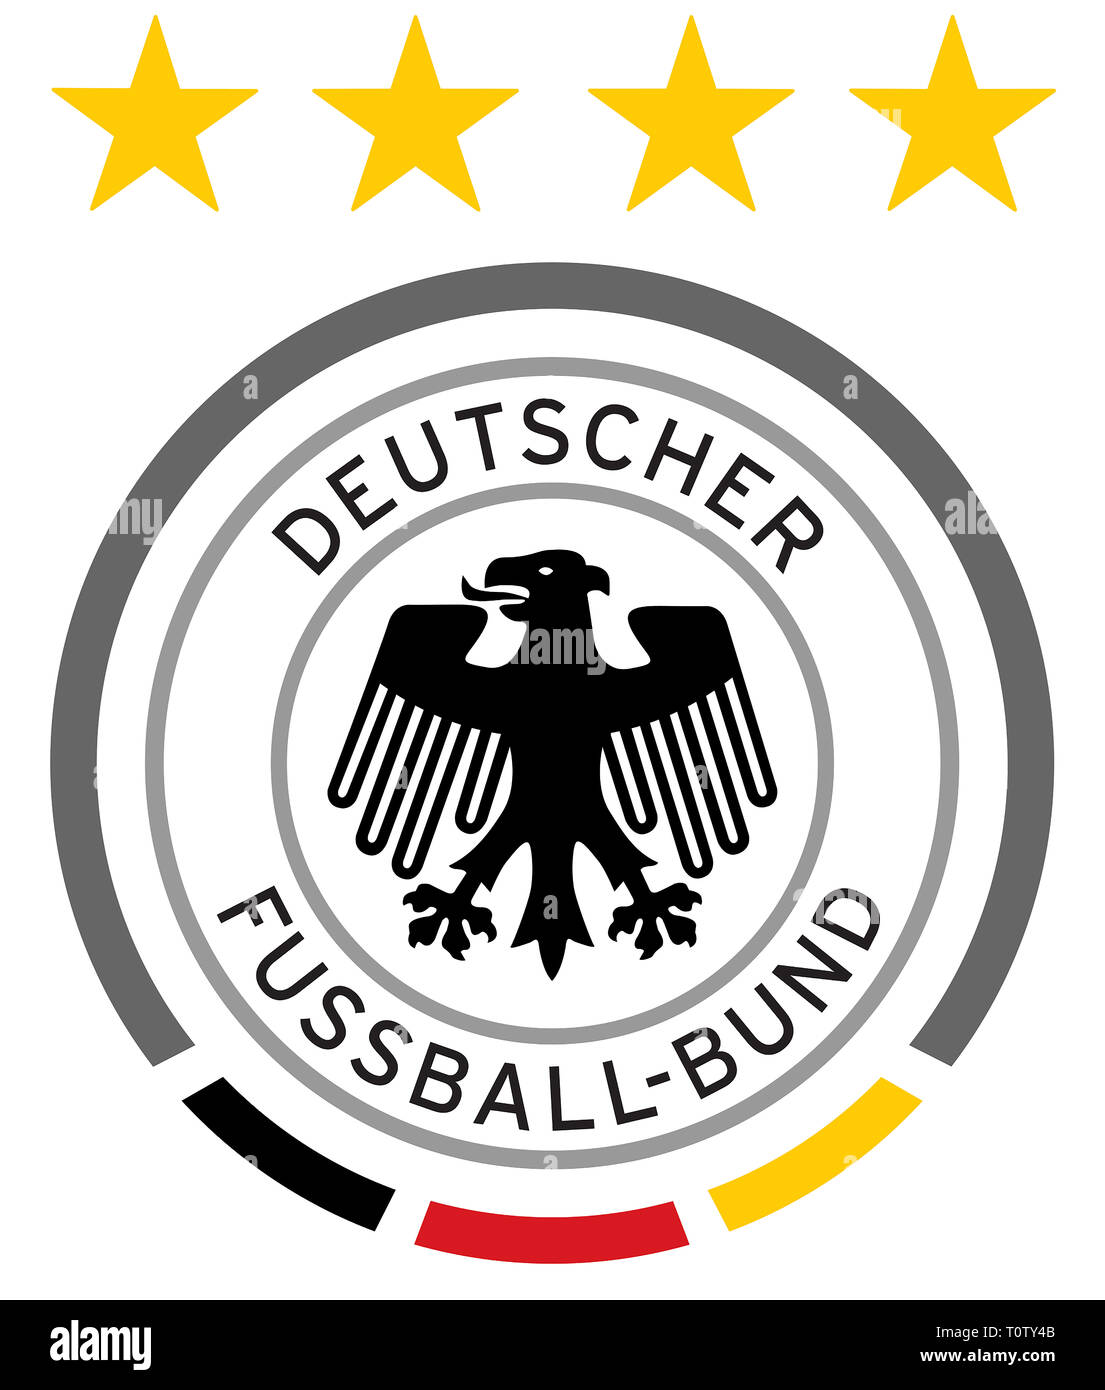 Logo of the German national football team - Germany. Stock Photo